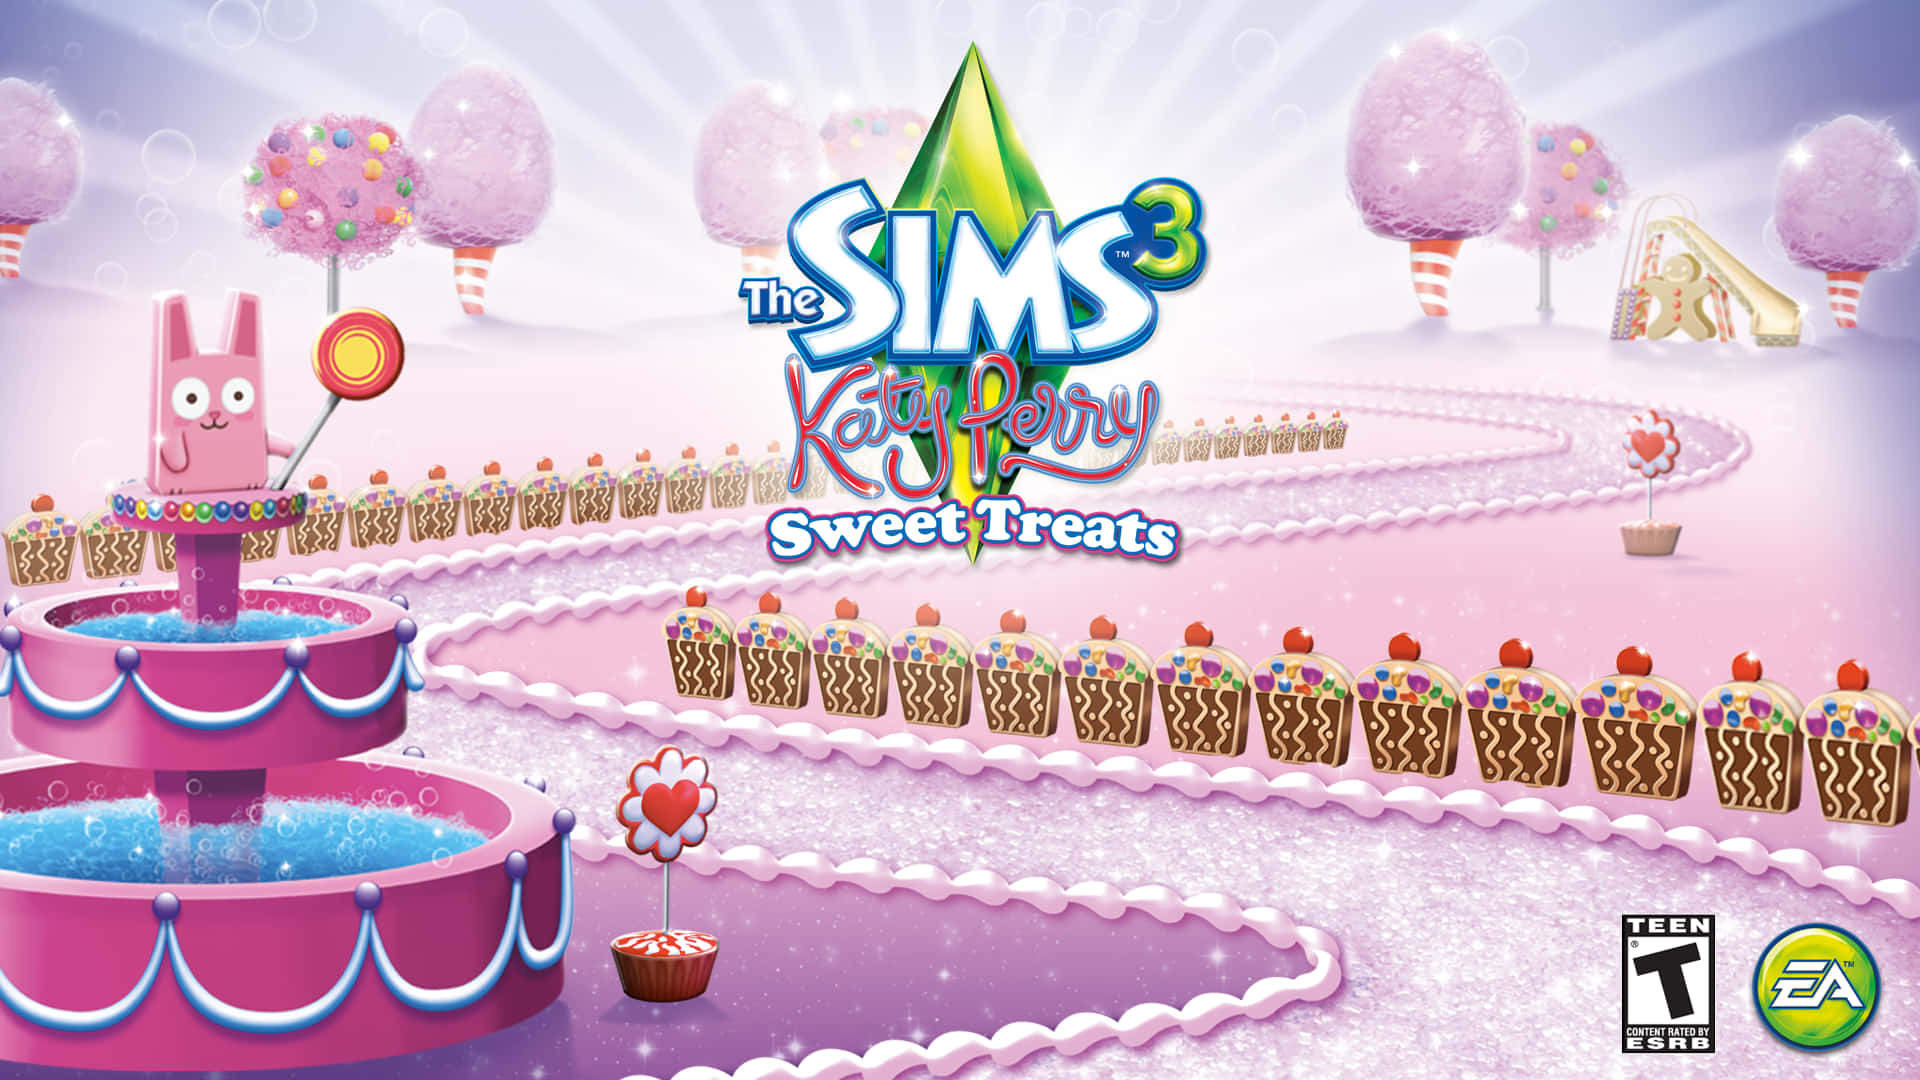 The Sims 3 Katy Perry Sweet Treats Wallpaper